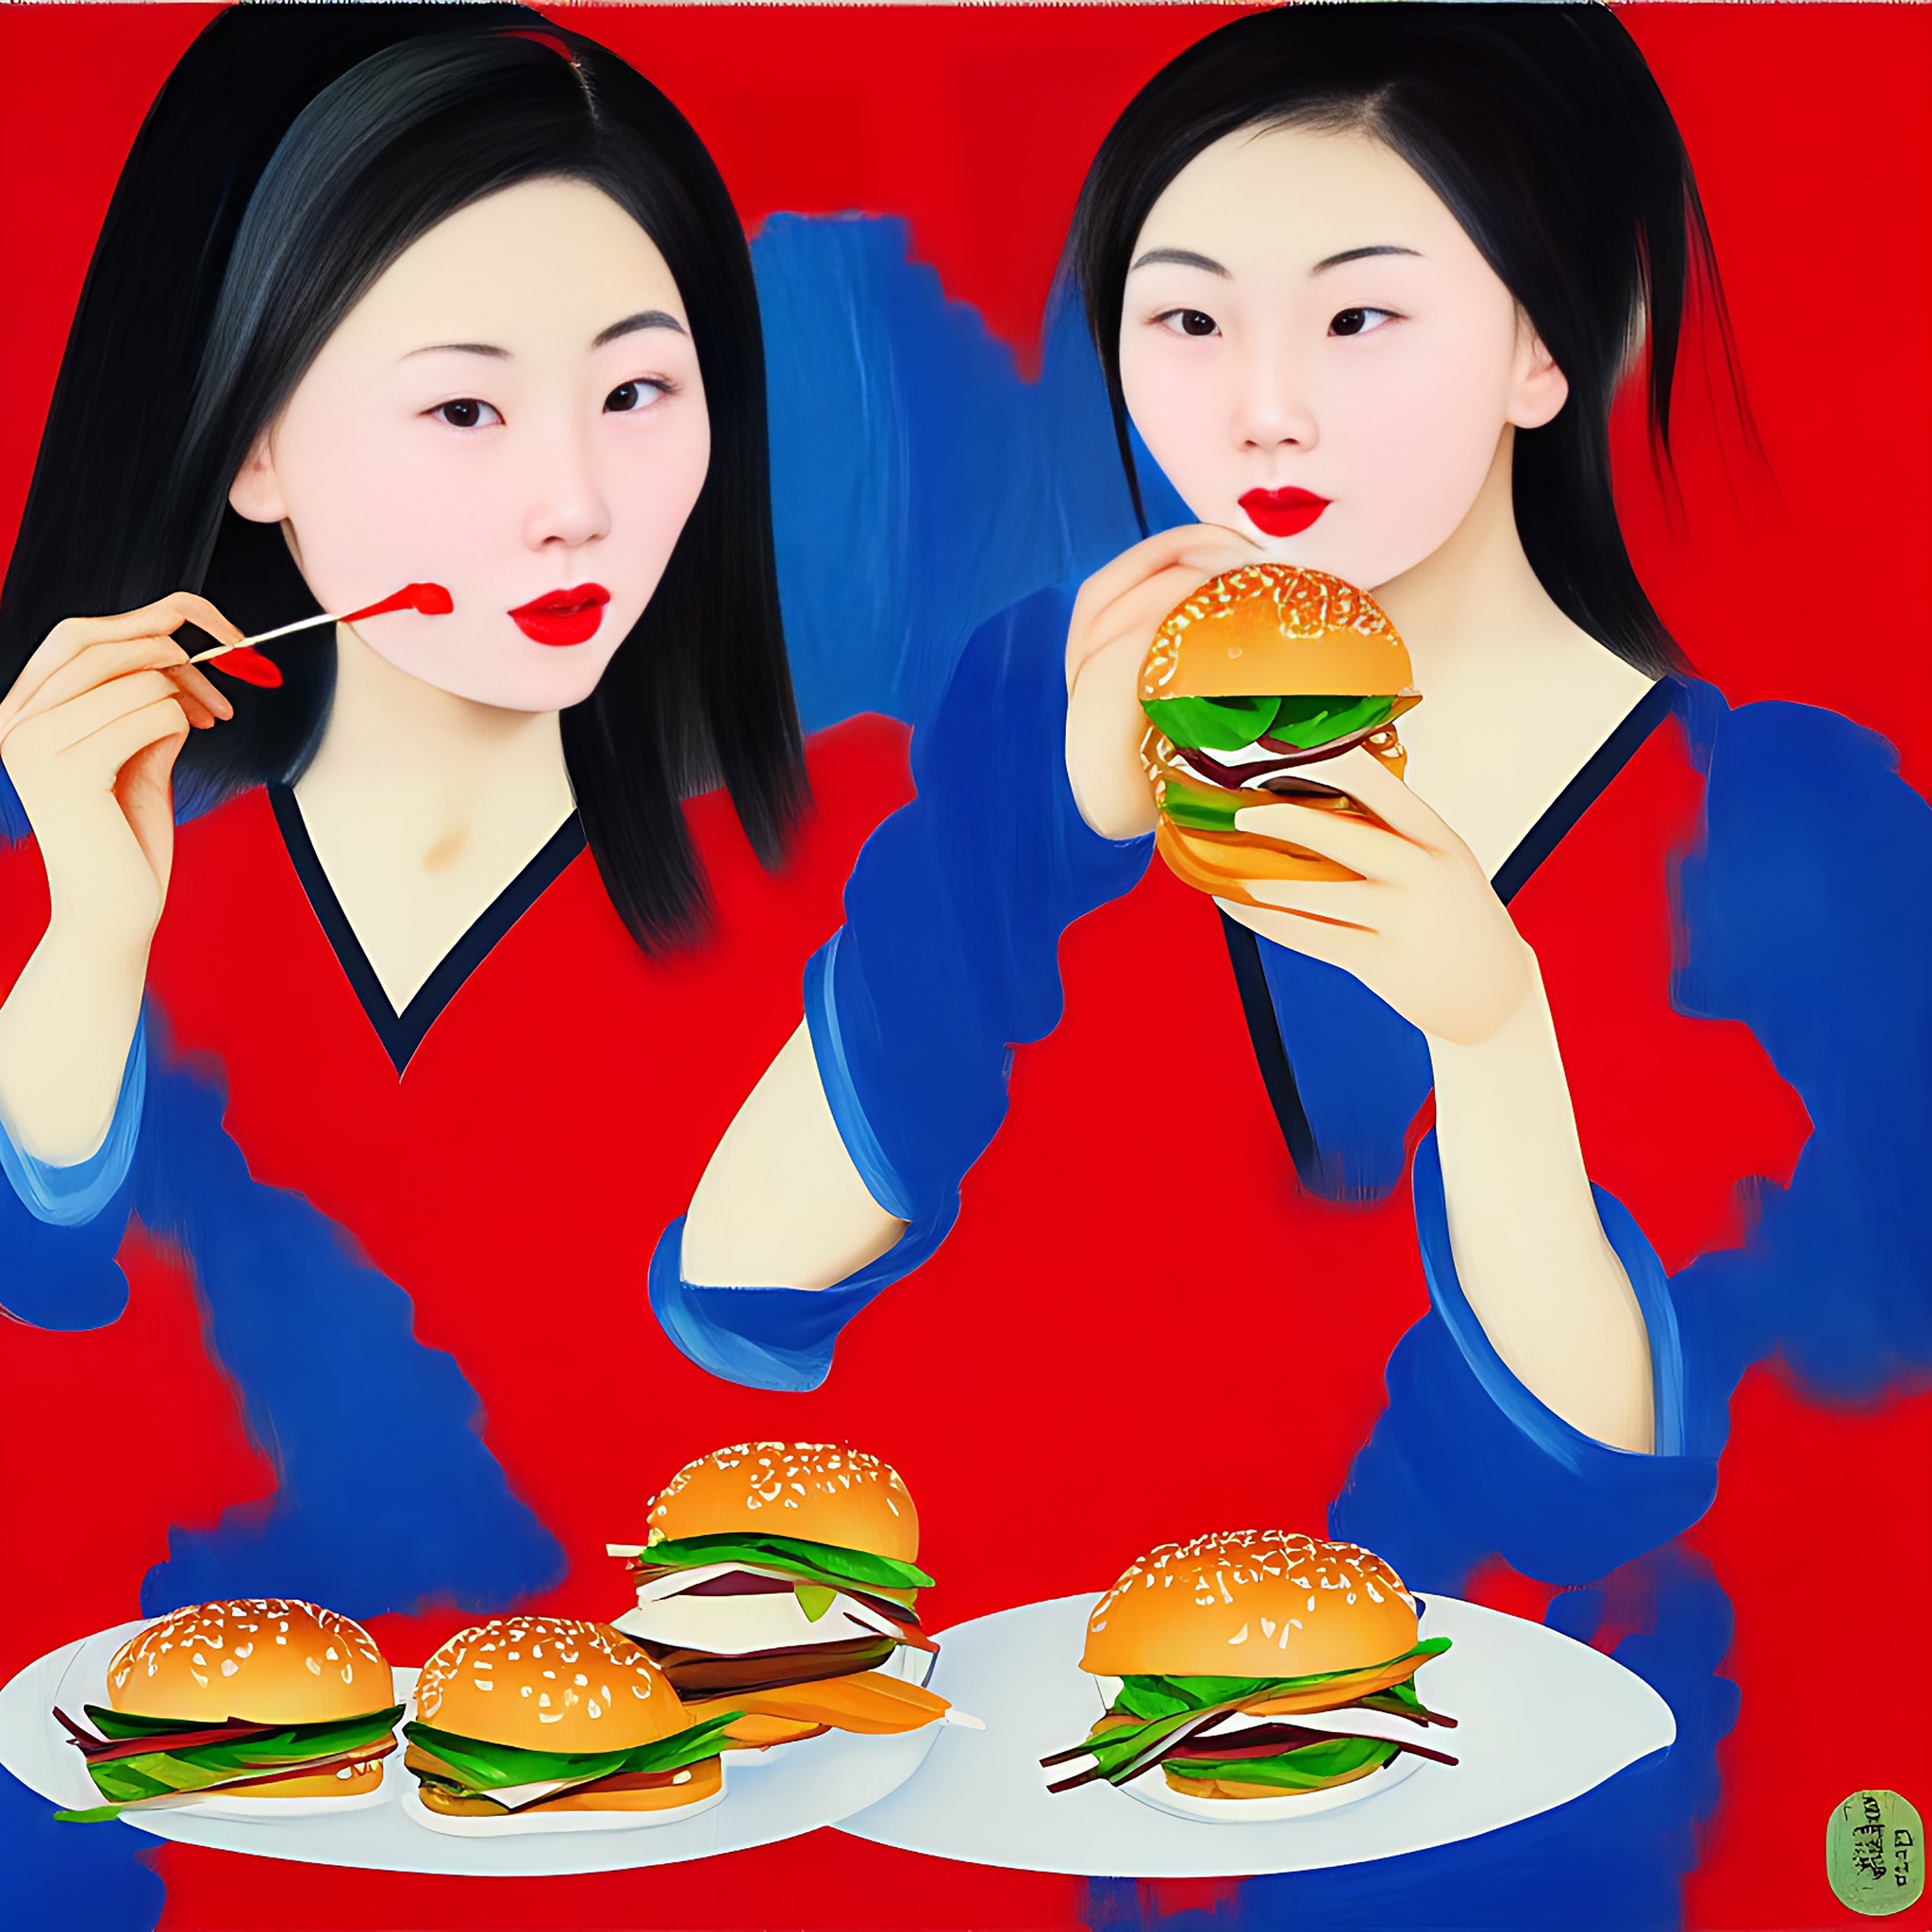 chinese-girls-eating-burger-painting